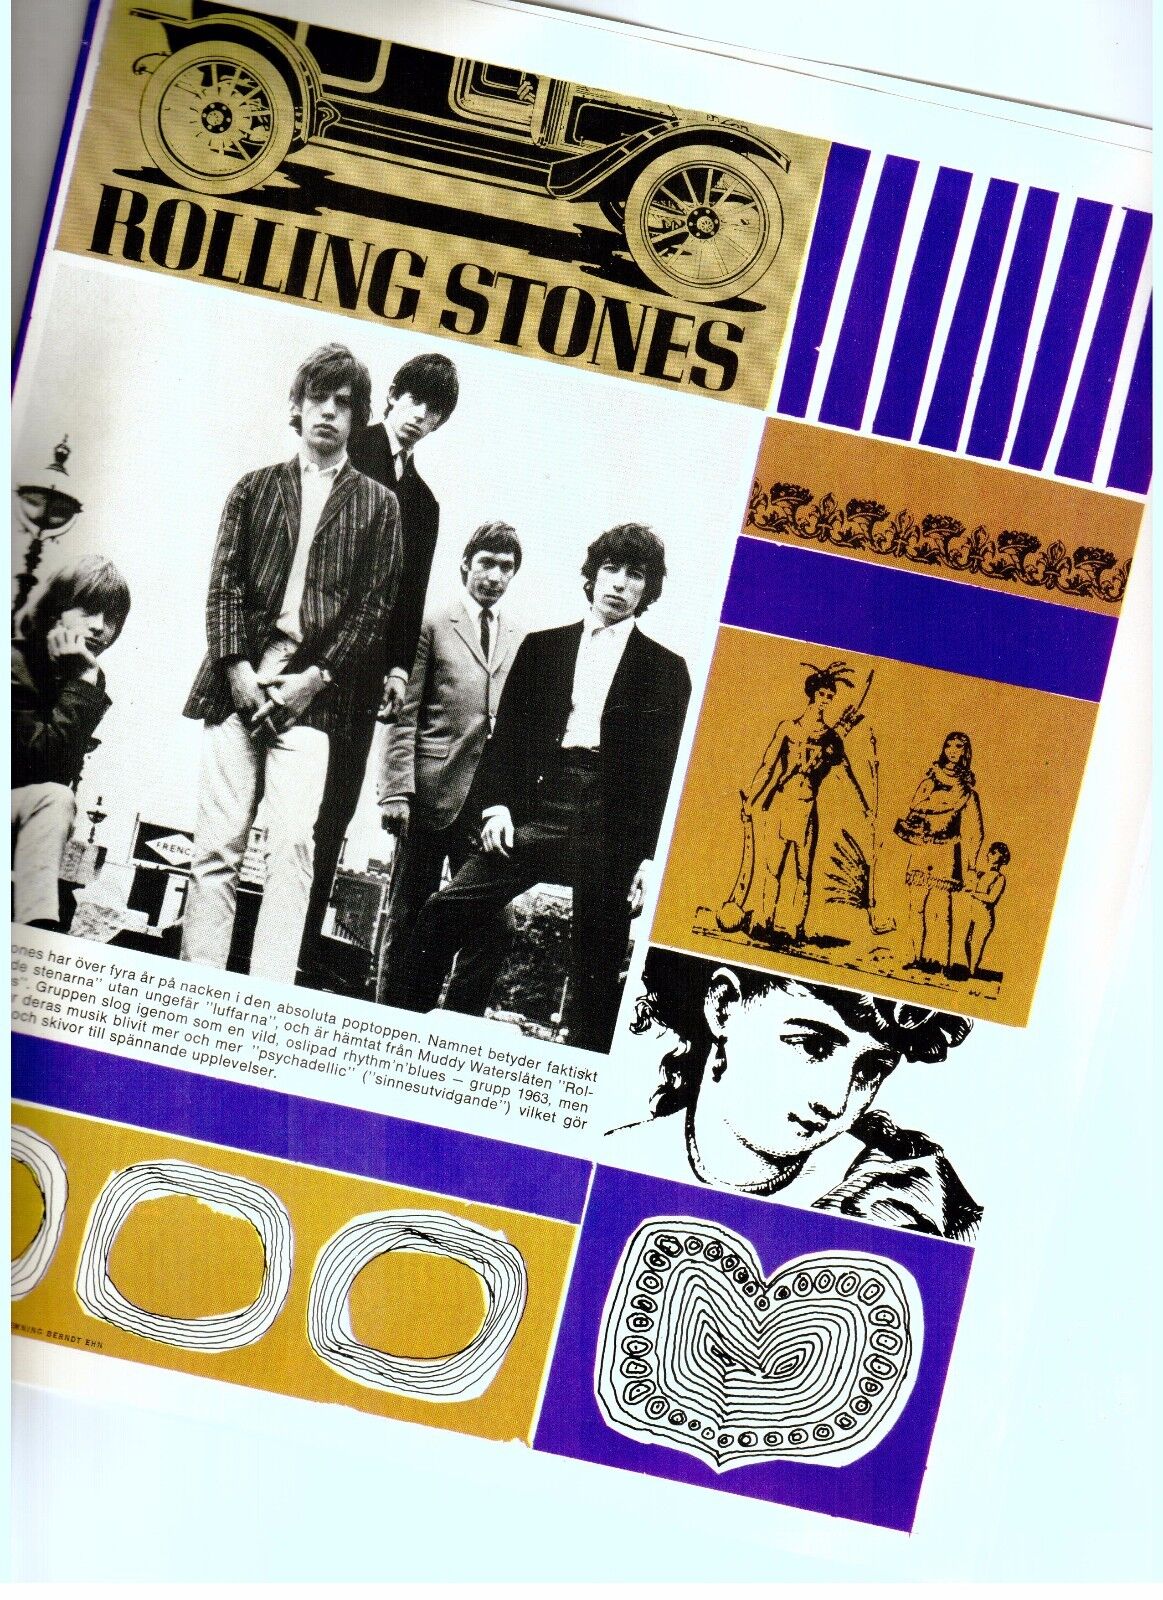 Rolling Stones Rare original Book wrap Dust Cover 1960s rare and seldom seen!!!!